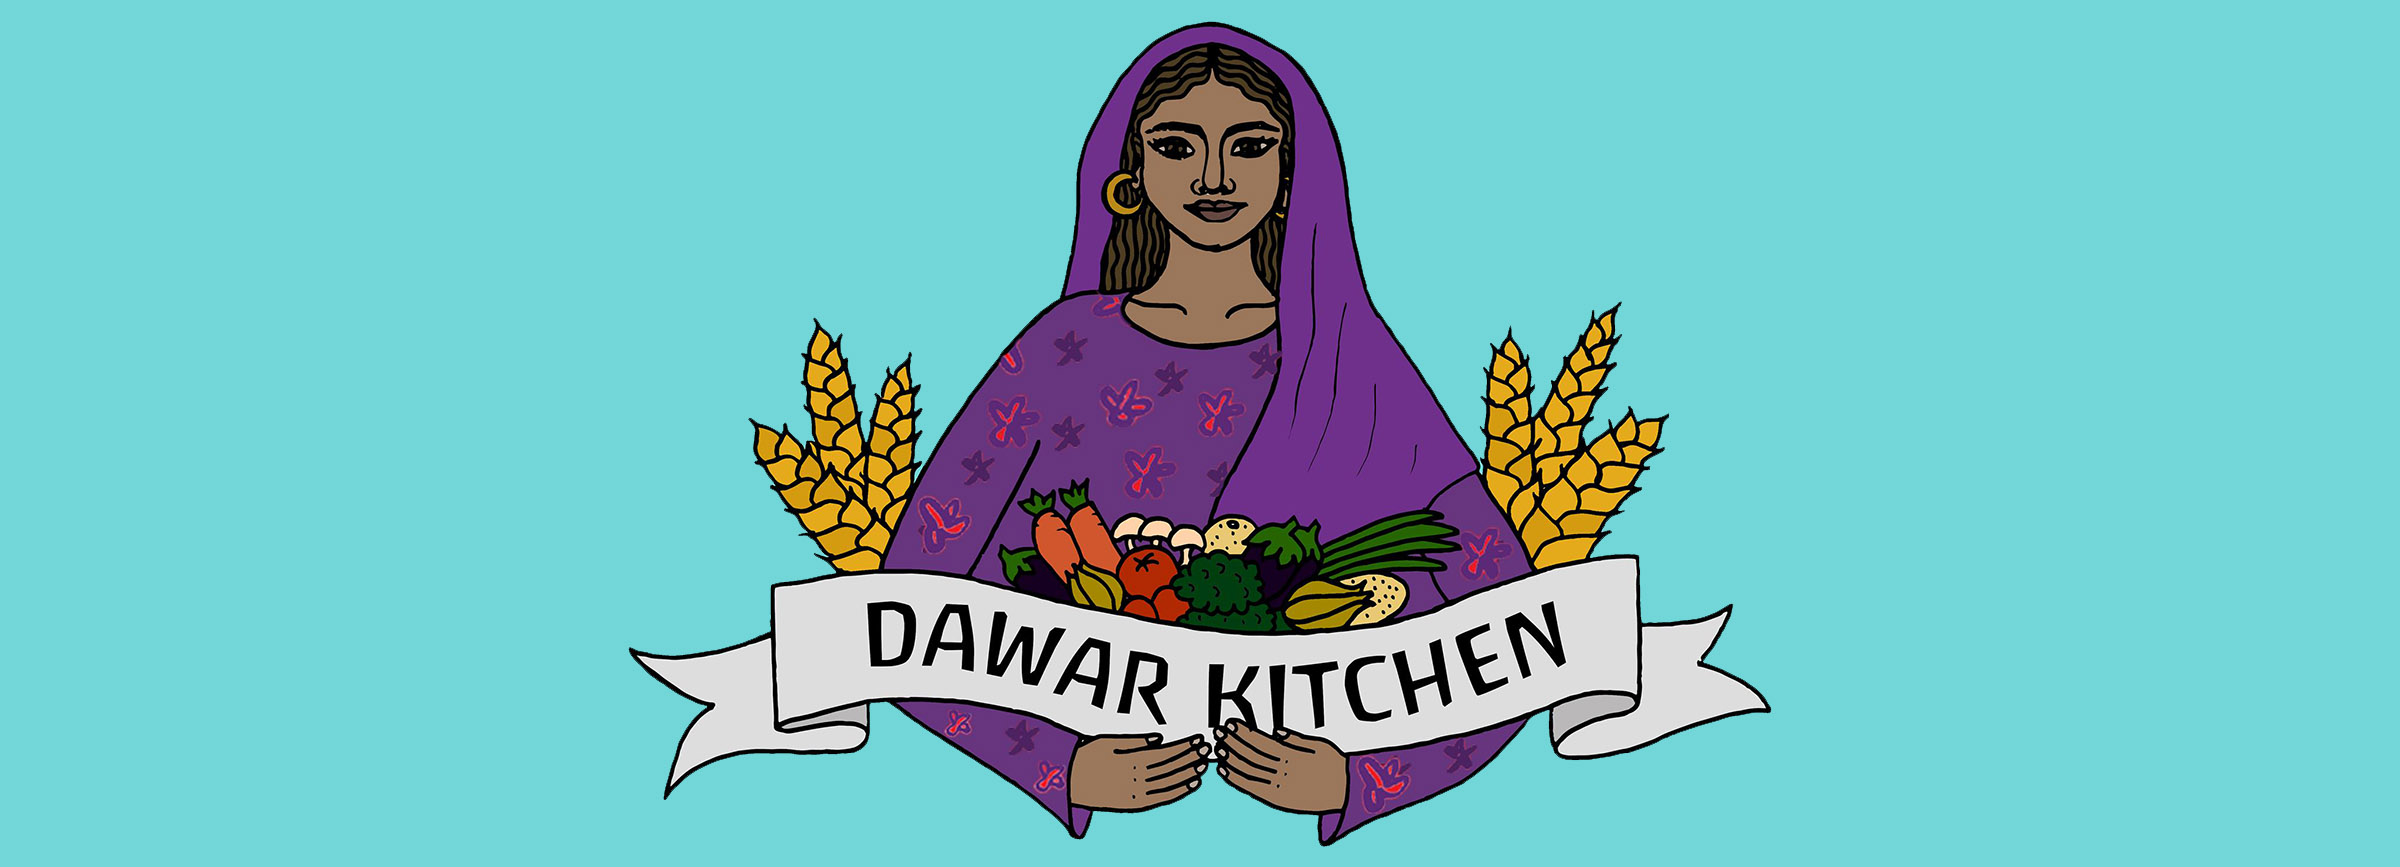 Dawar Kitchen.jpg